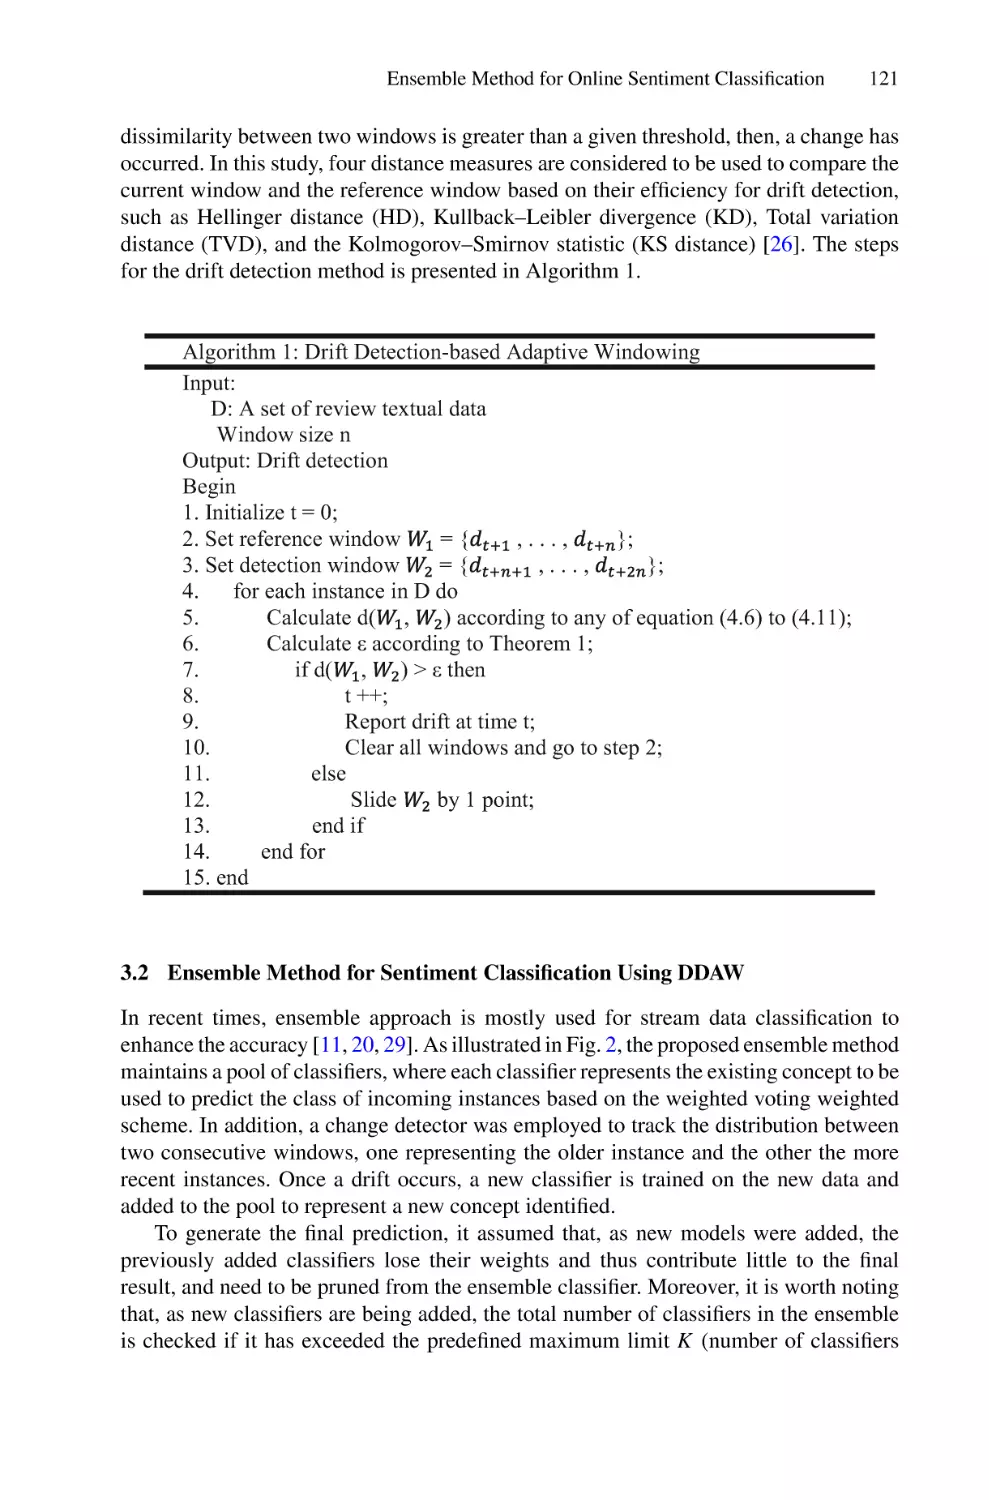 3.2 Ensemble Method for Sentiment Classification Using DDAW